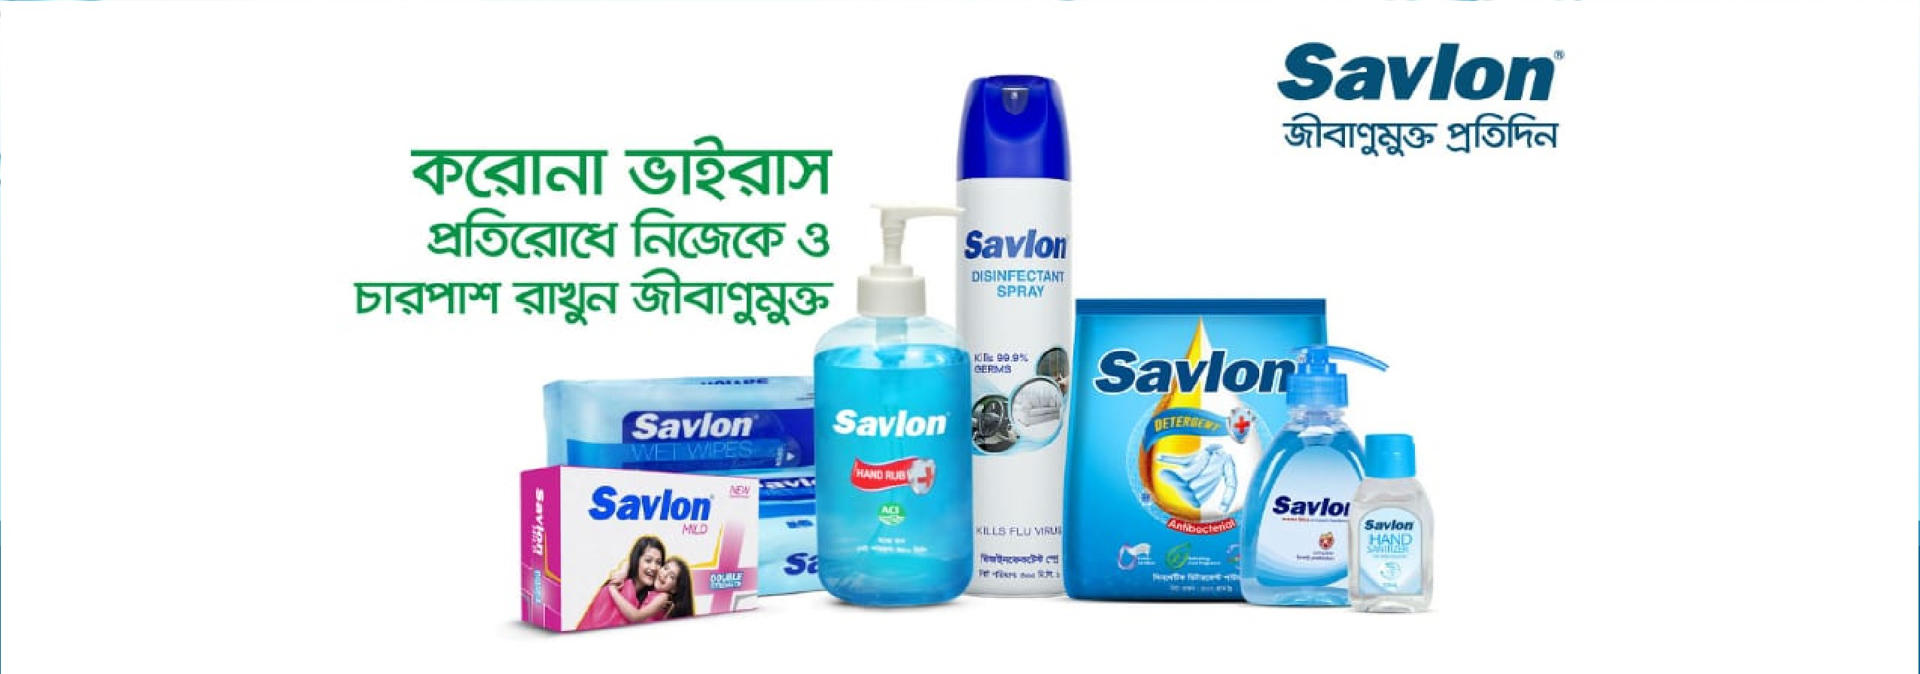 Picture for brand Savlon